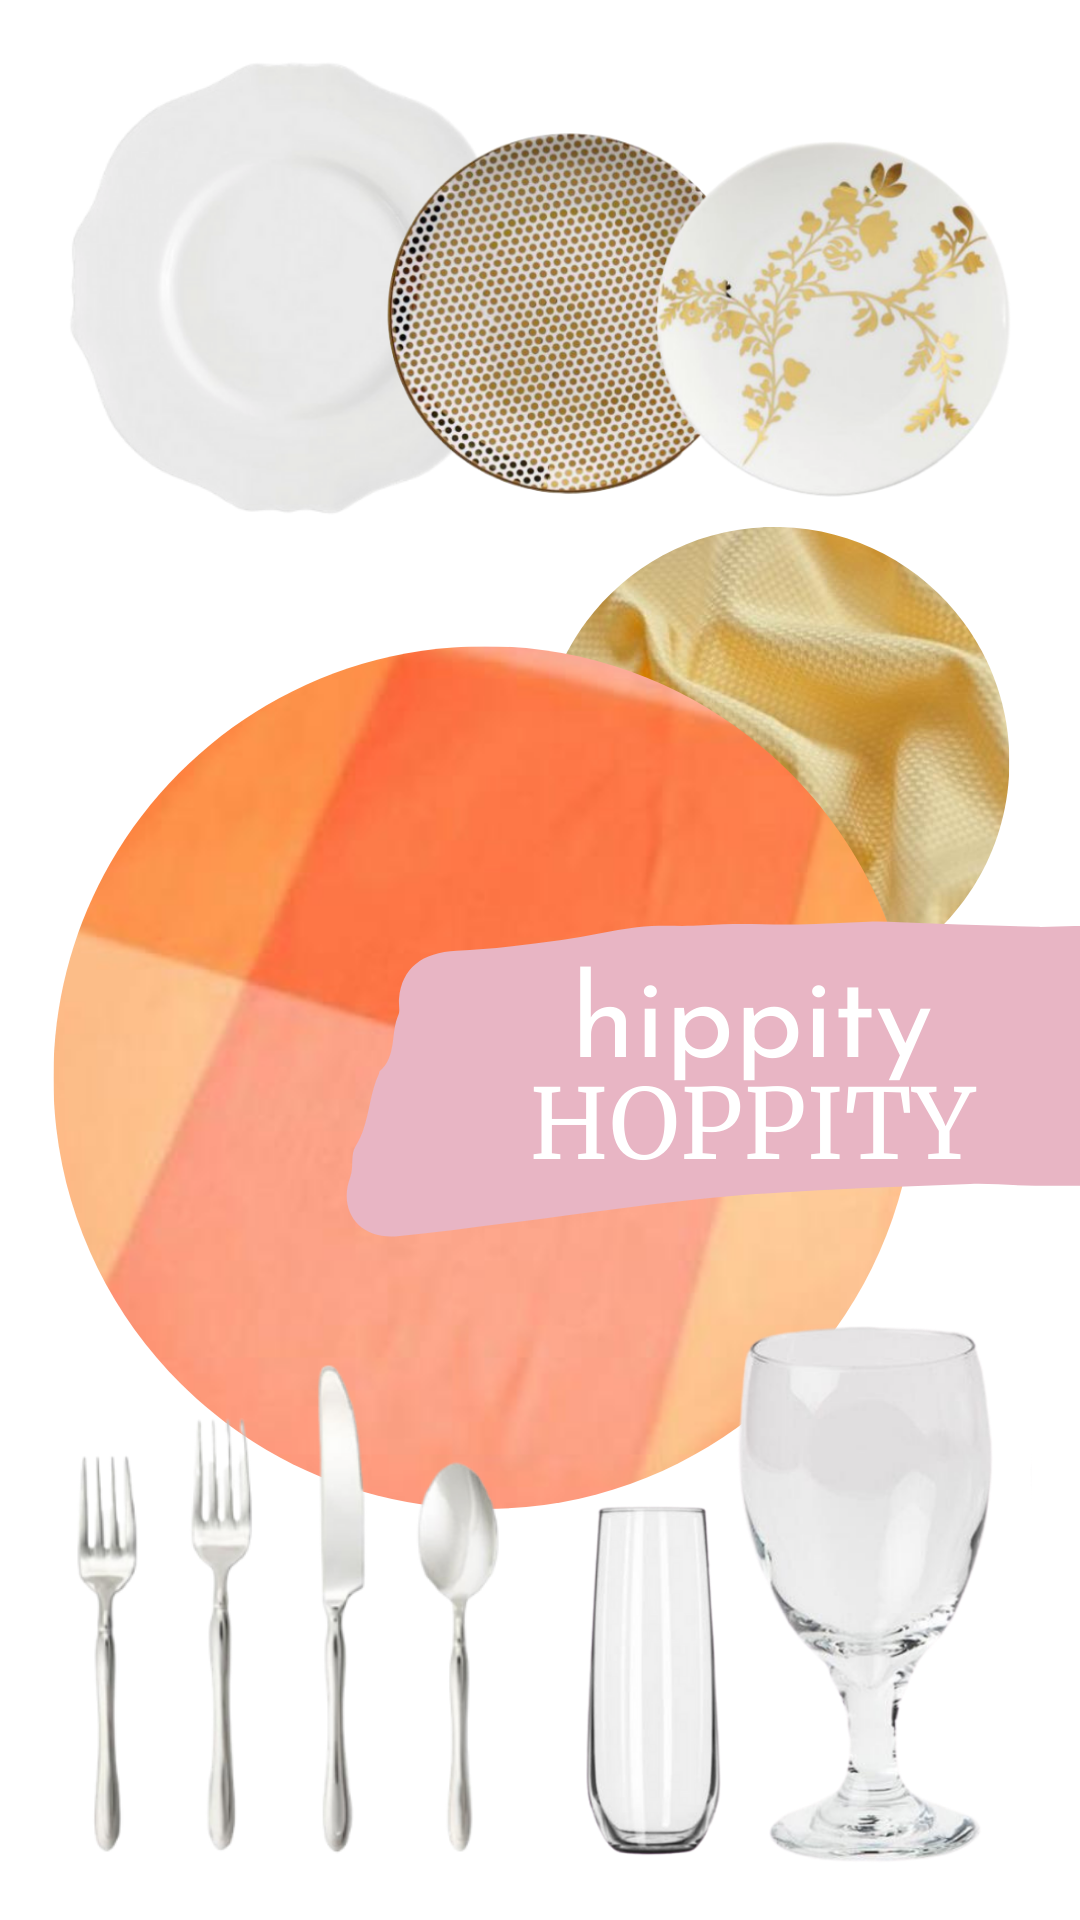 hippity hoppity box